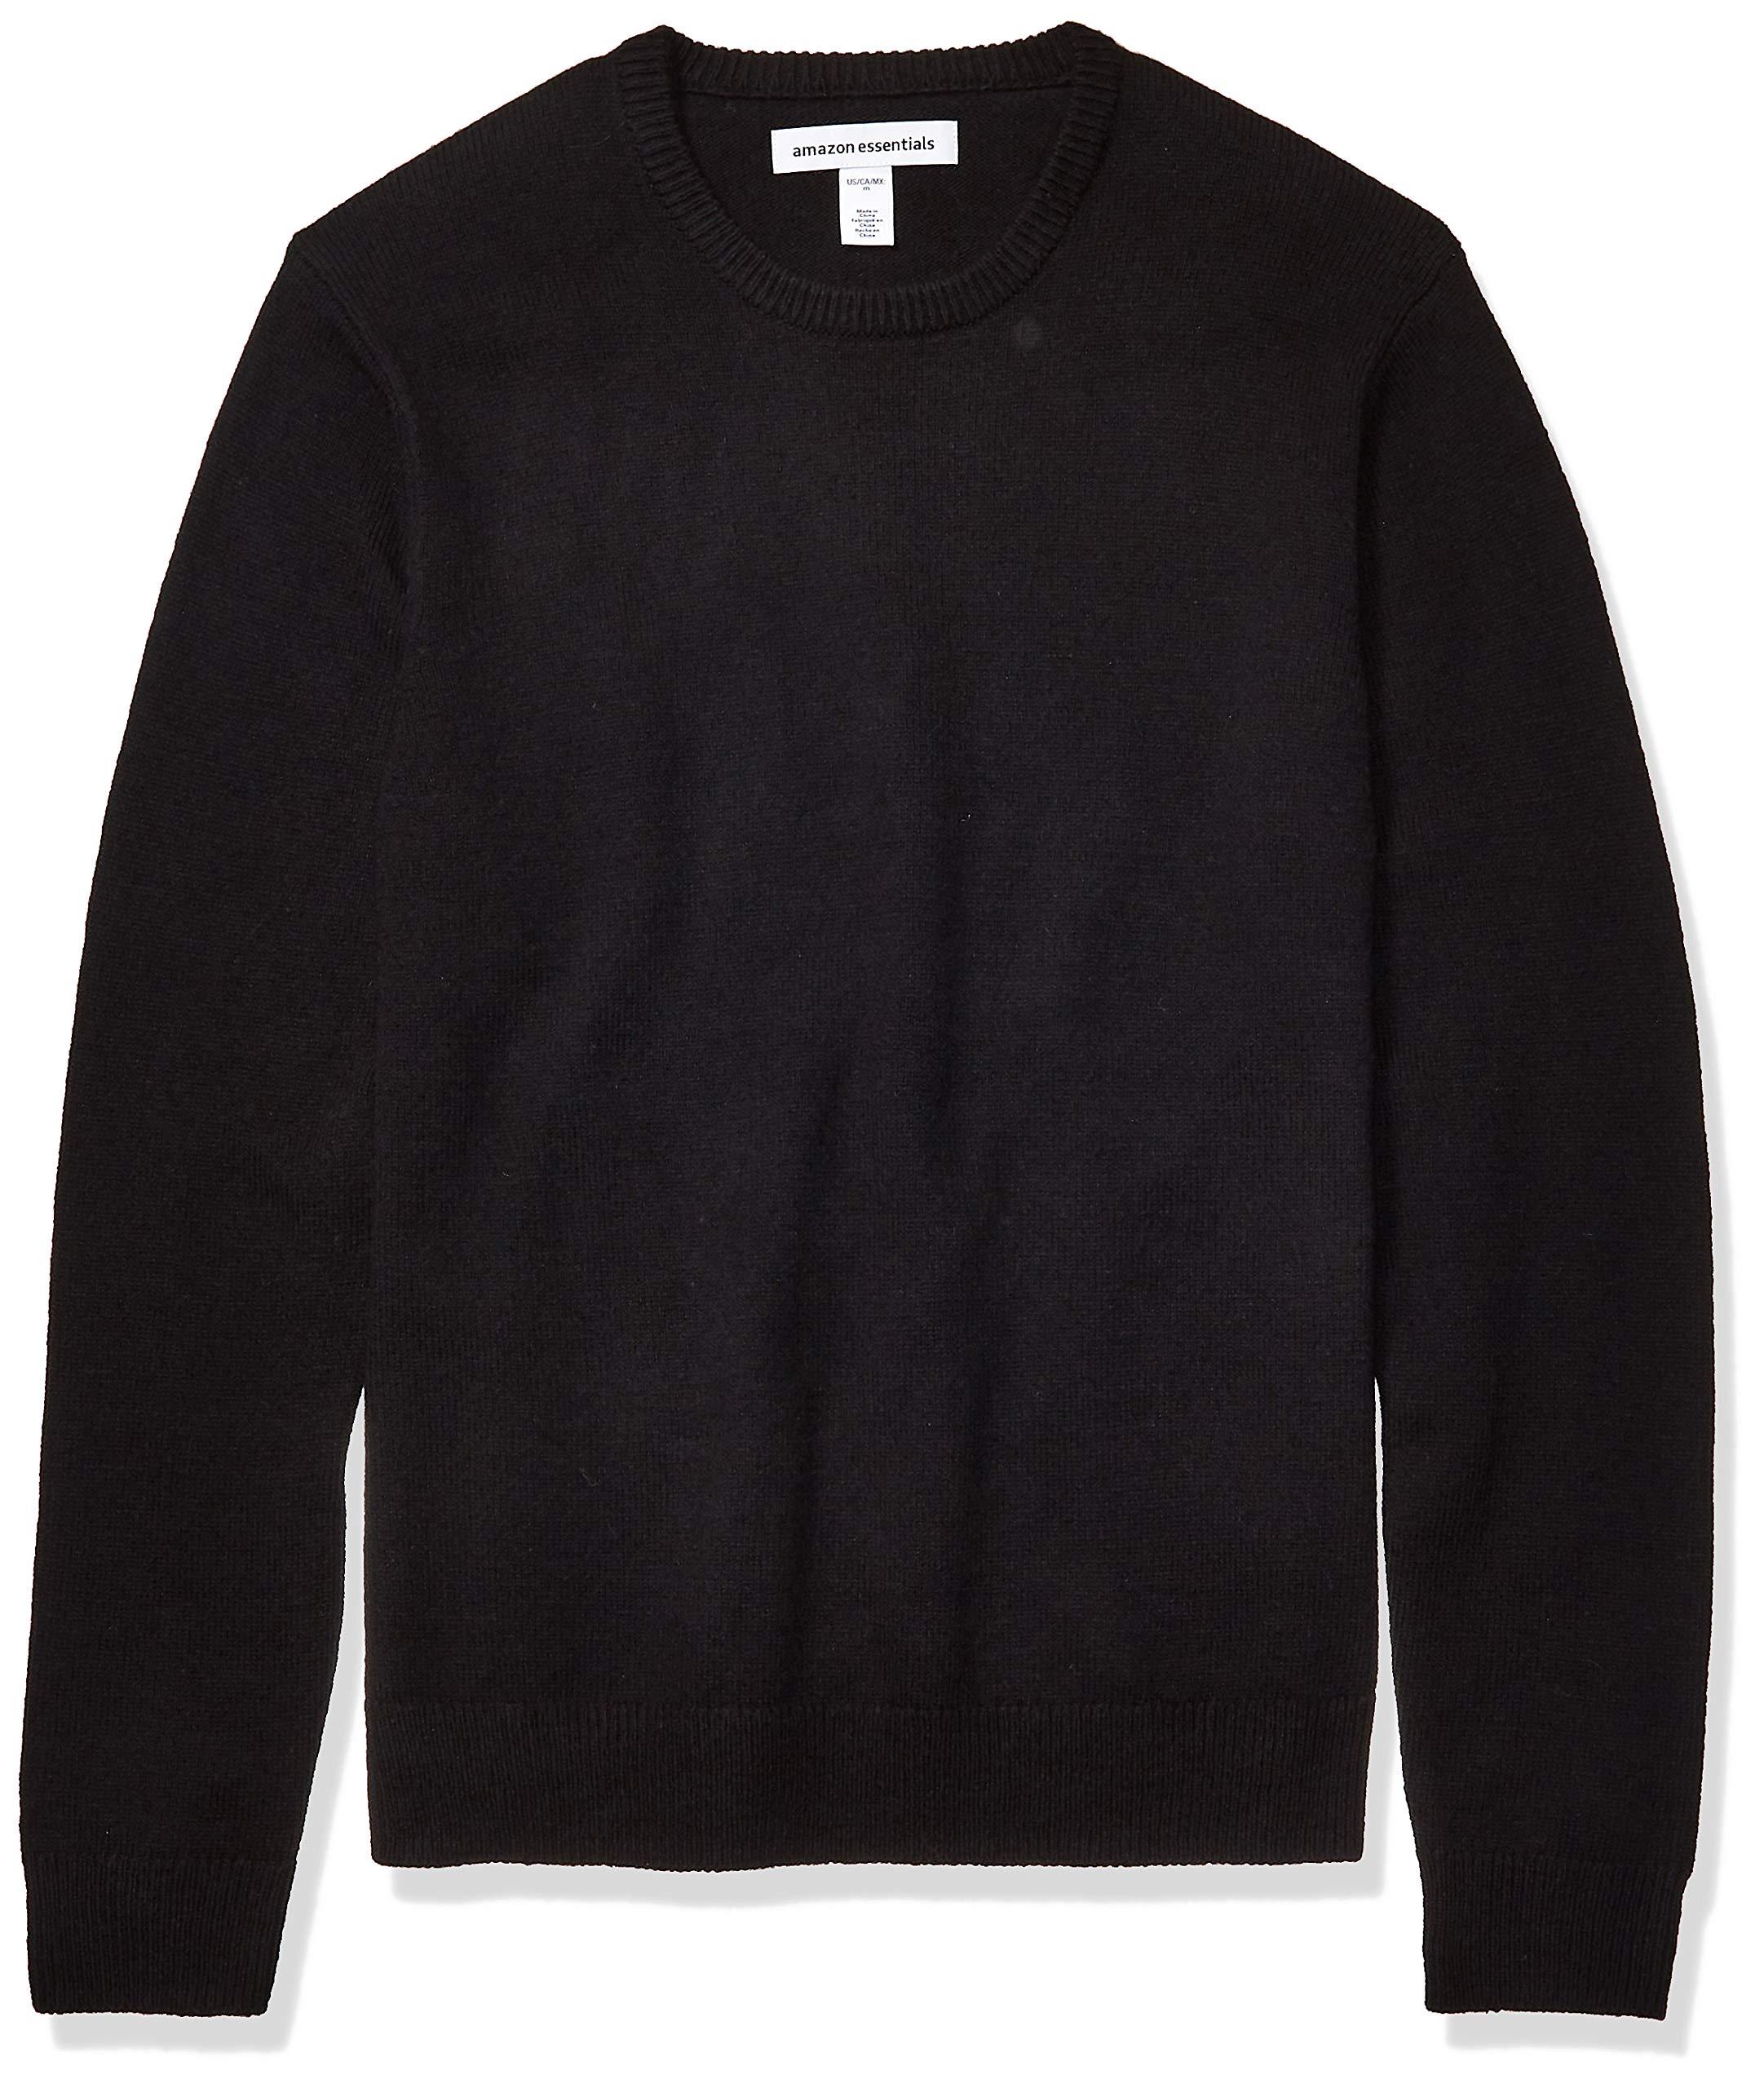 Amazon Essentials Midweight Crewneck Sweater in Black for Men - Lyst